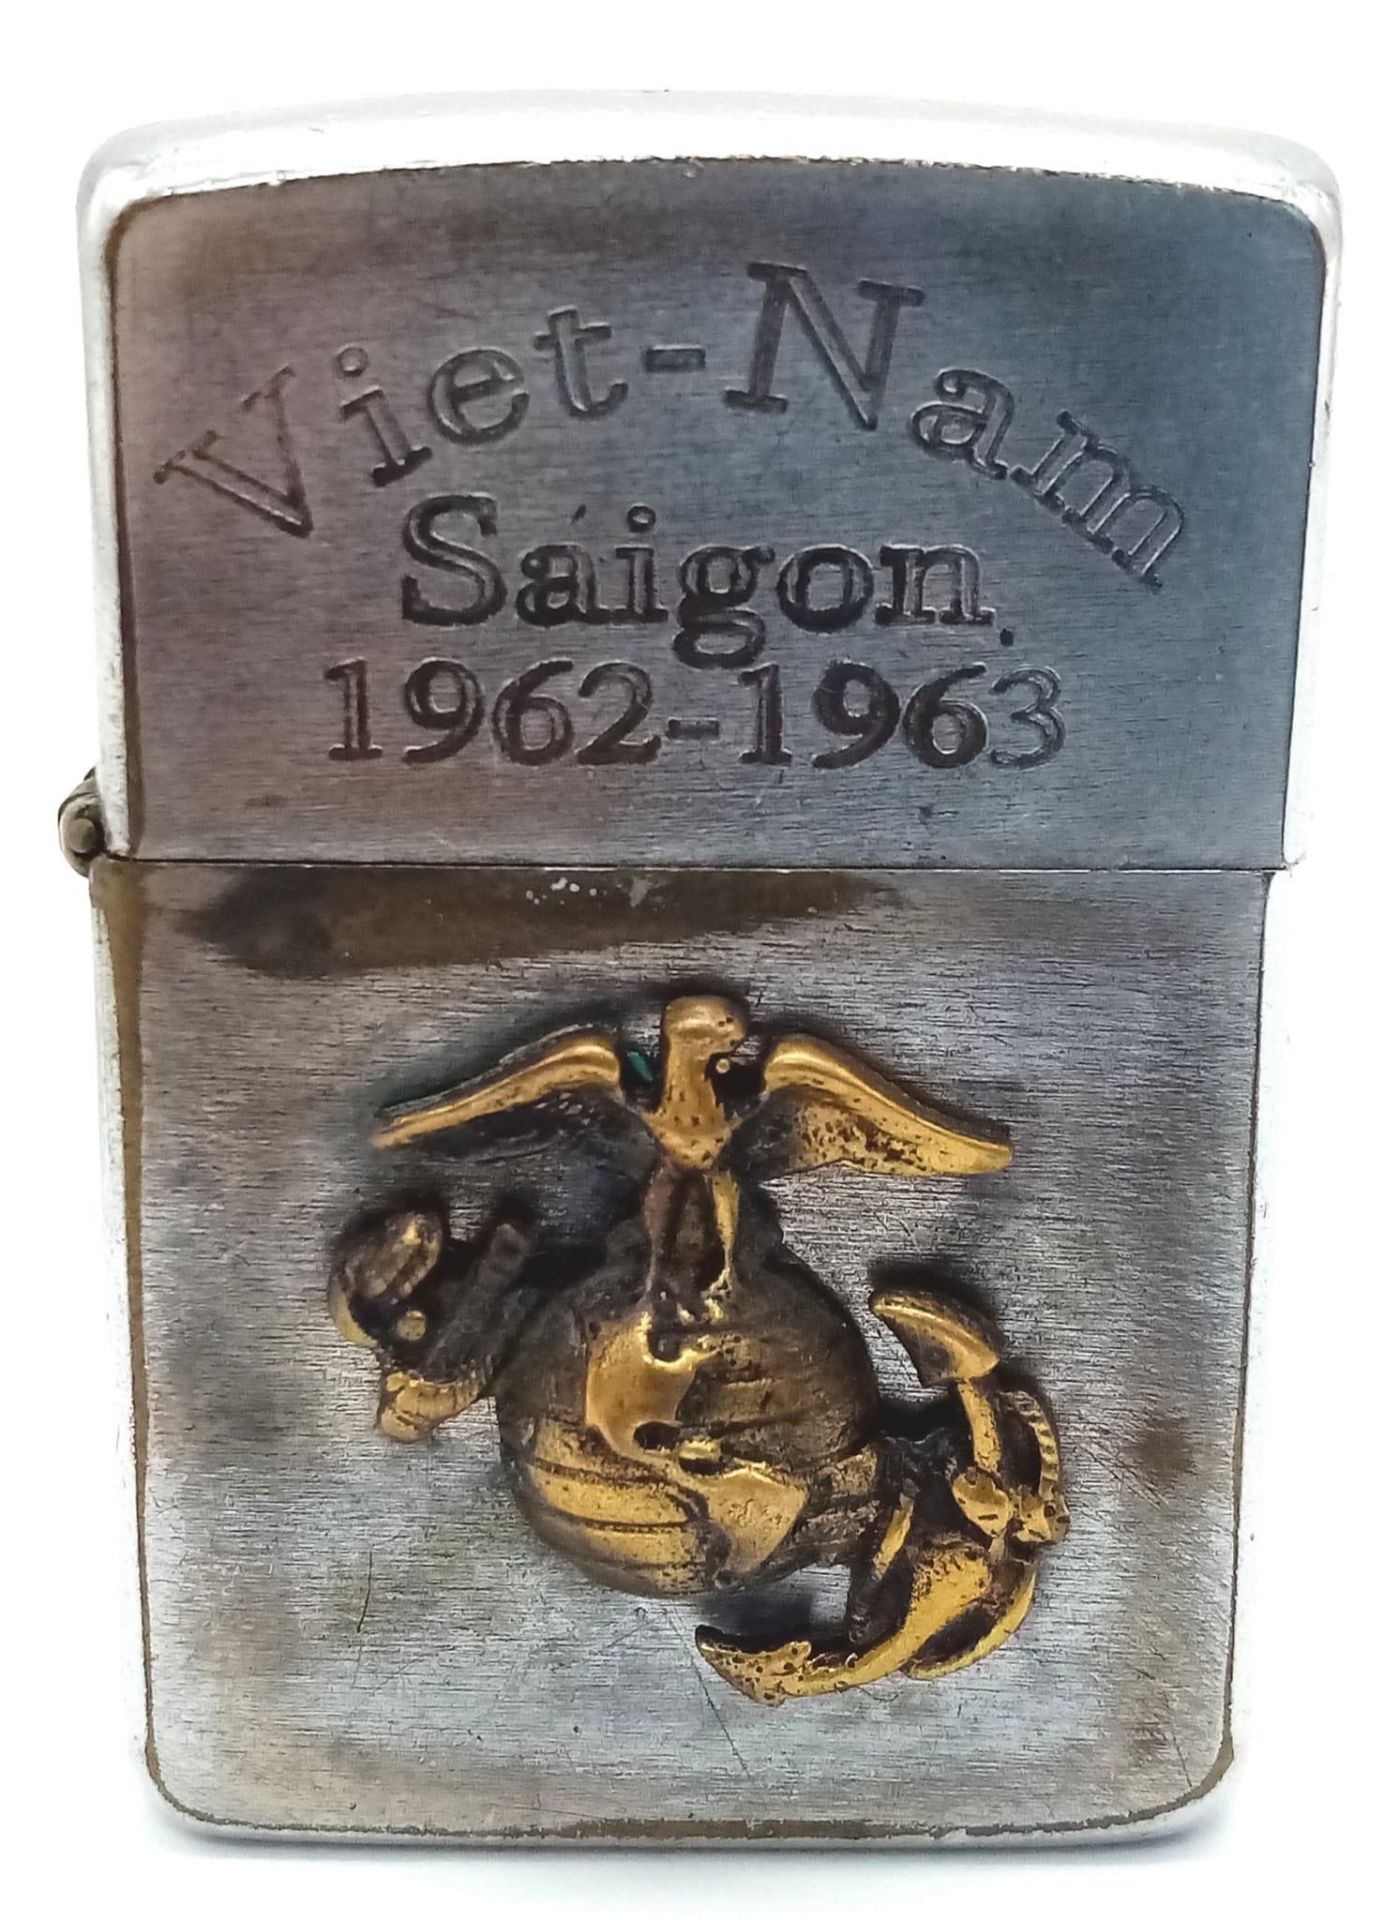 Vietnam War Era USMC Zippo Lighter. Dated Coded 1961 on the base. Engraved 1962-63